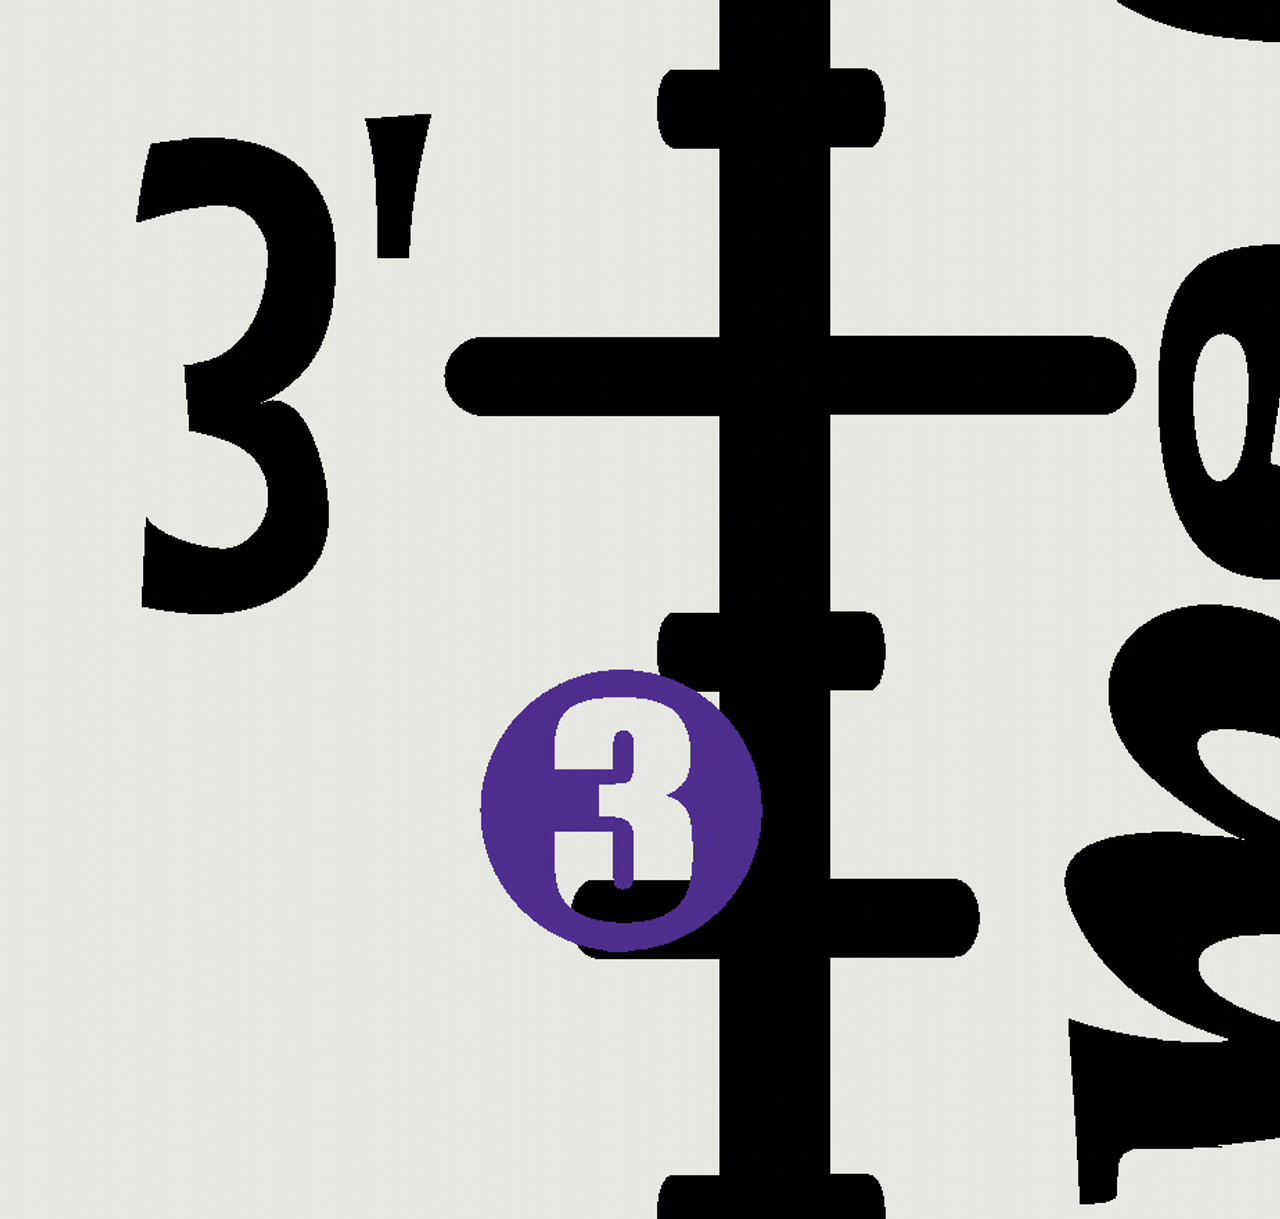 Numbers 5 to 9 - Orange | Sticker